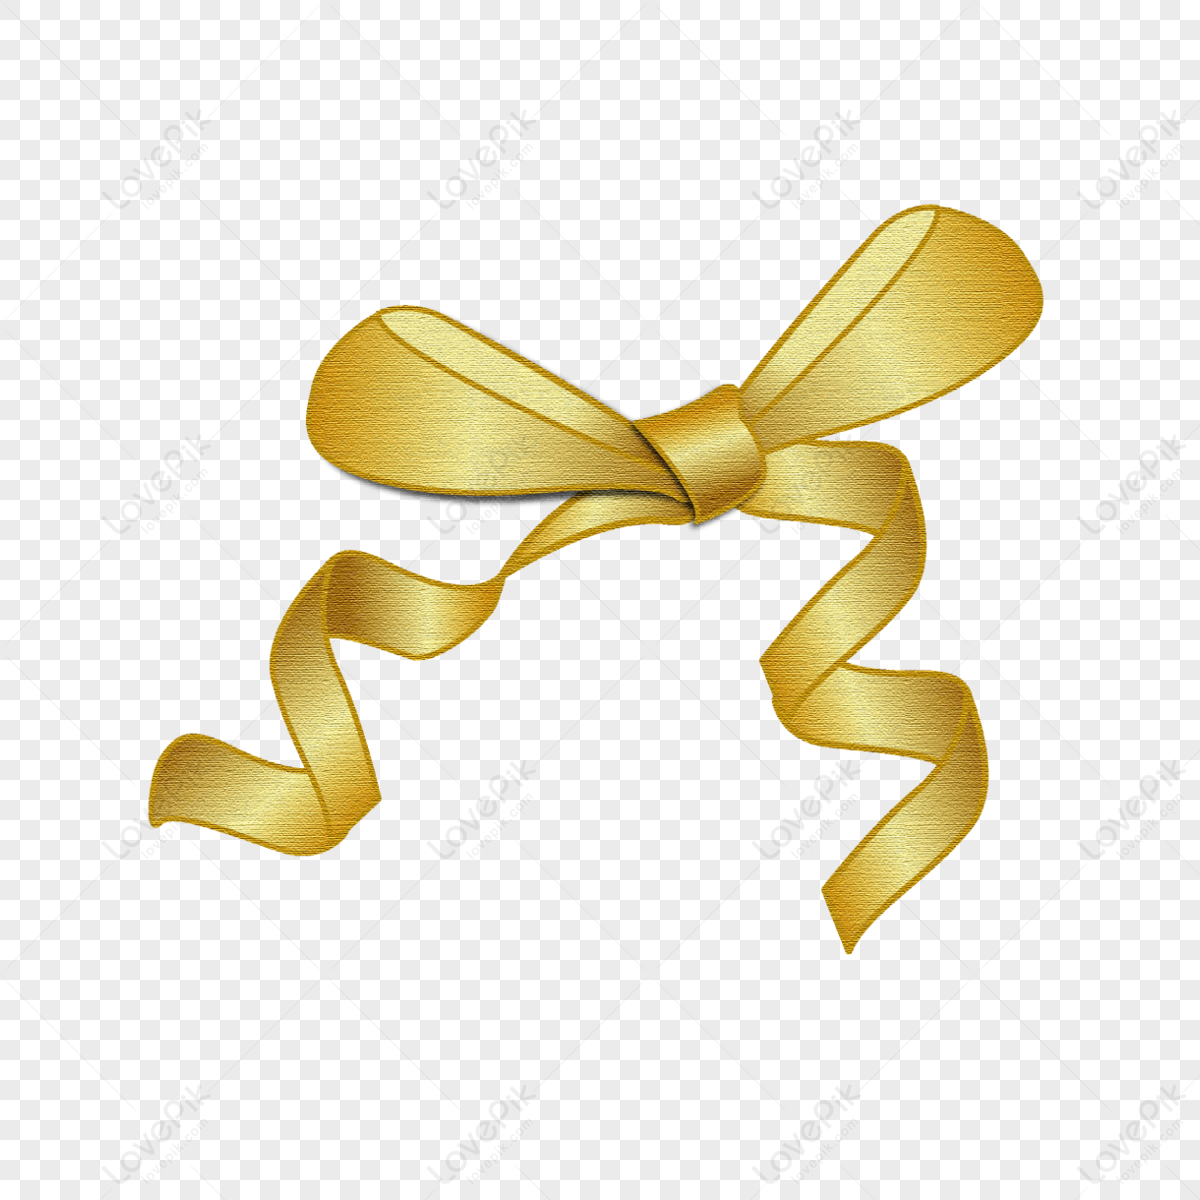 Gift ribbon gold Vectors & Illustrations for Free Download | Freepik